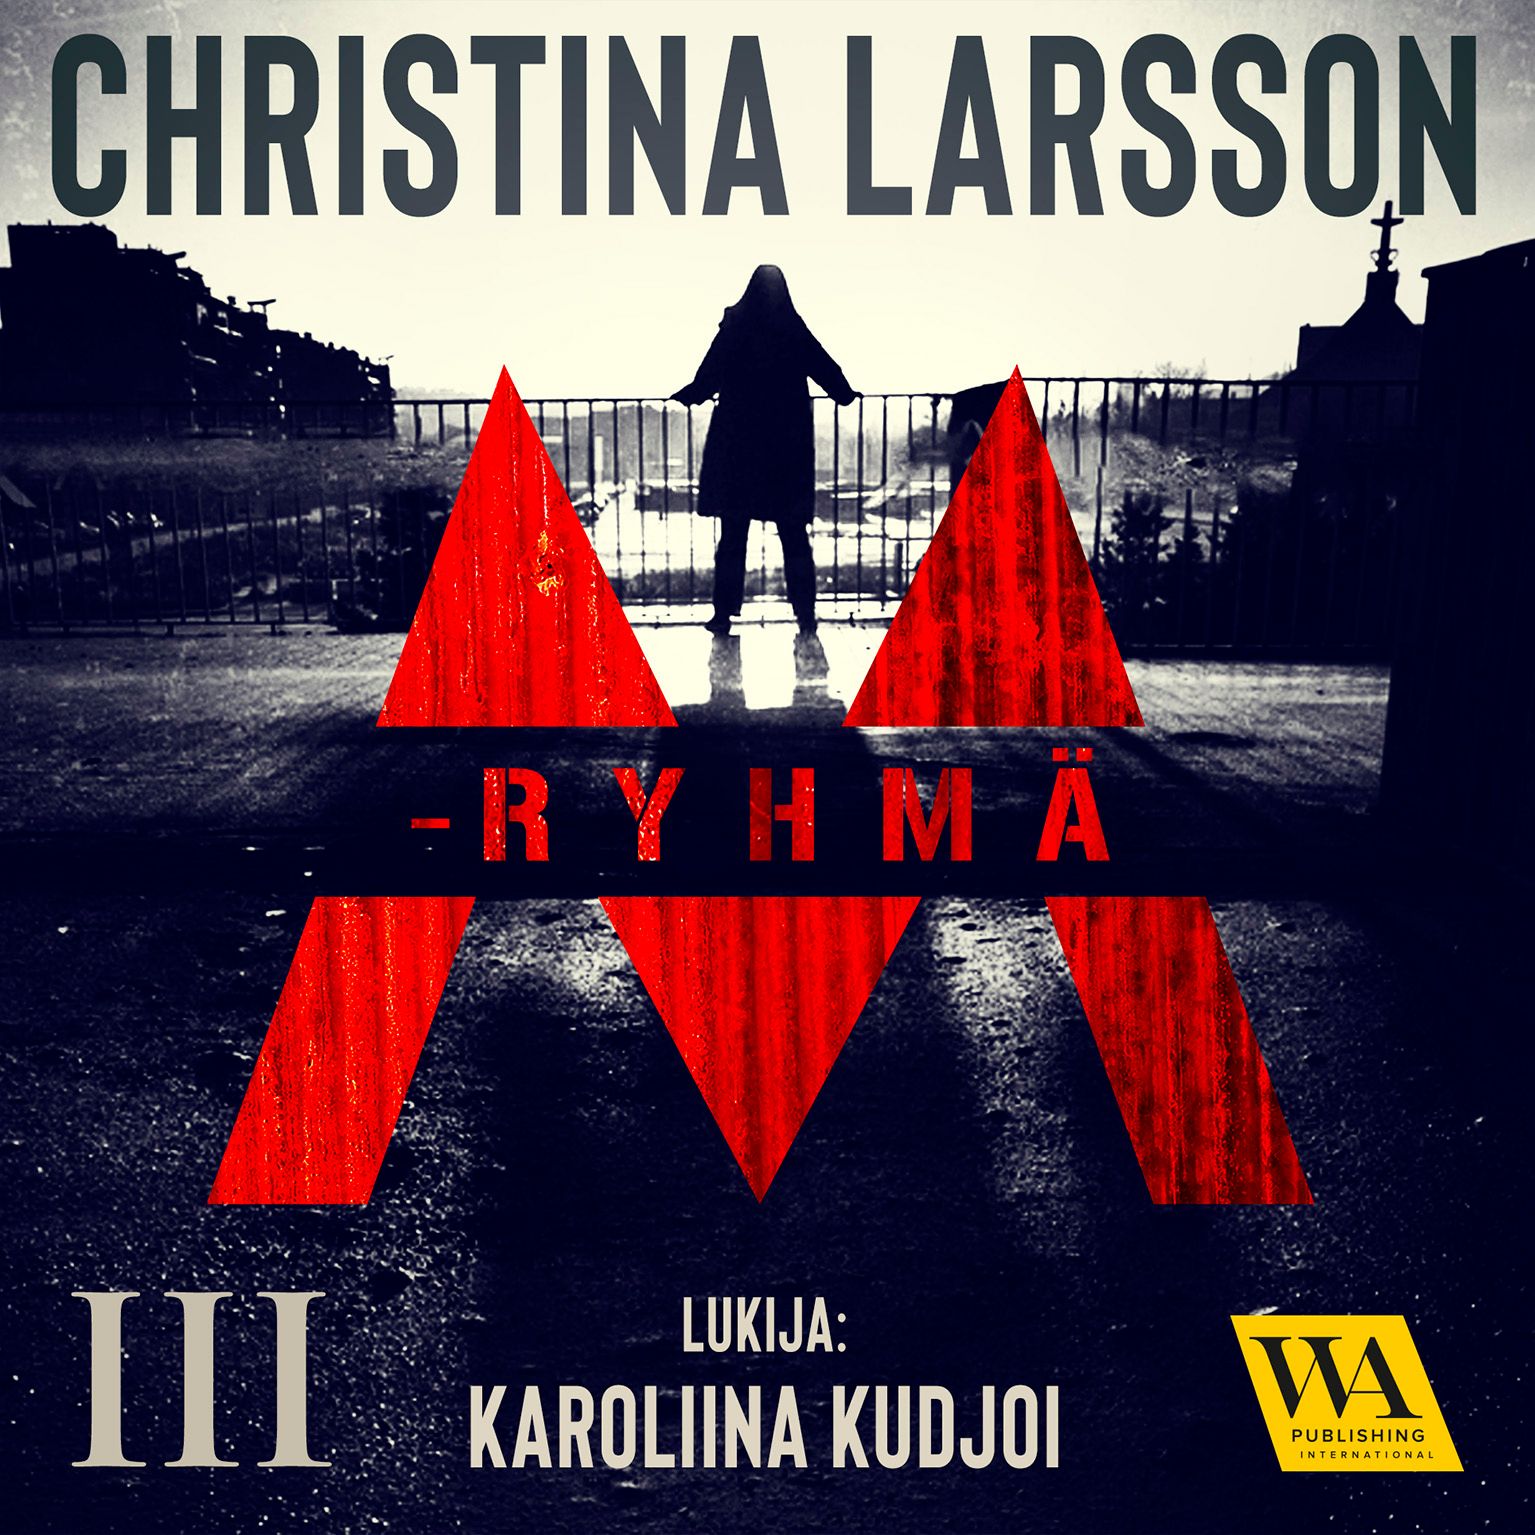 M-ryhmä III, ljudbok av Christina Larsson